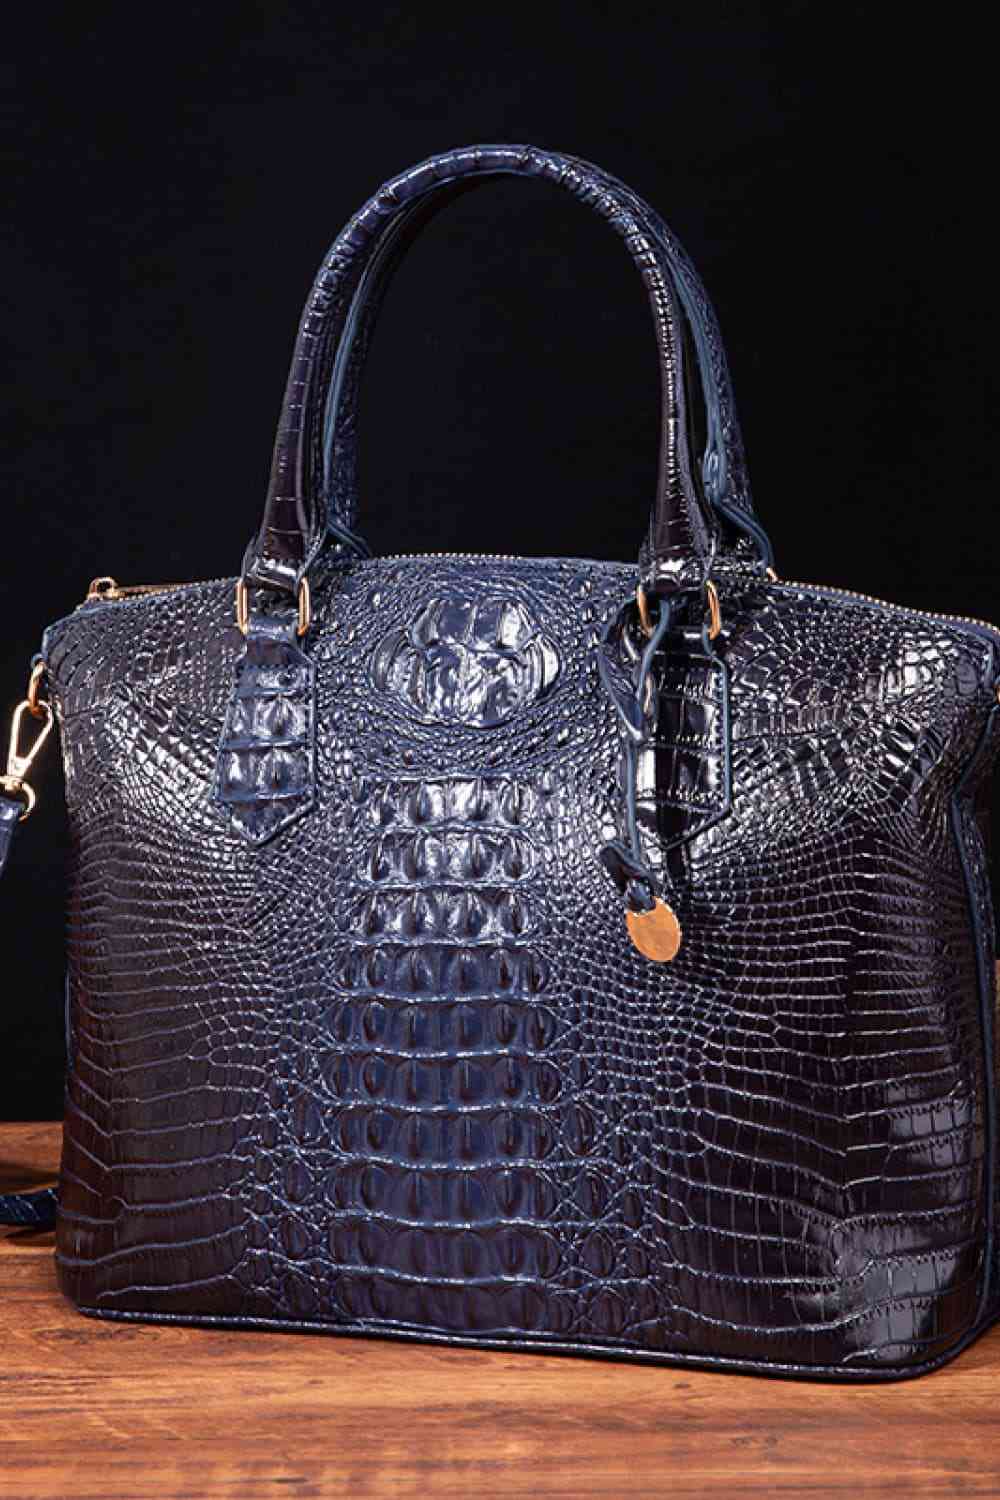 PU Leather Handbag - Just Enuff Sexy